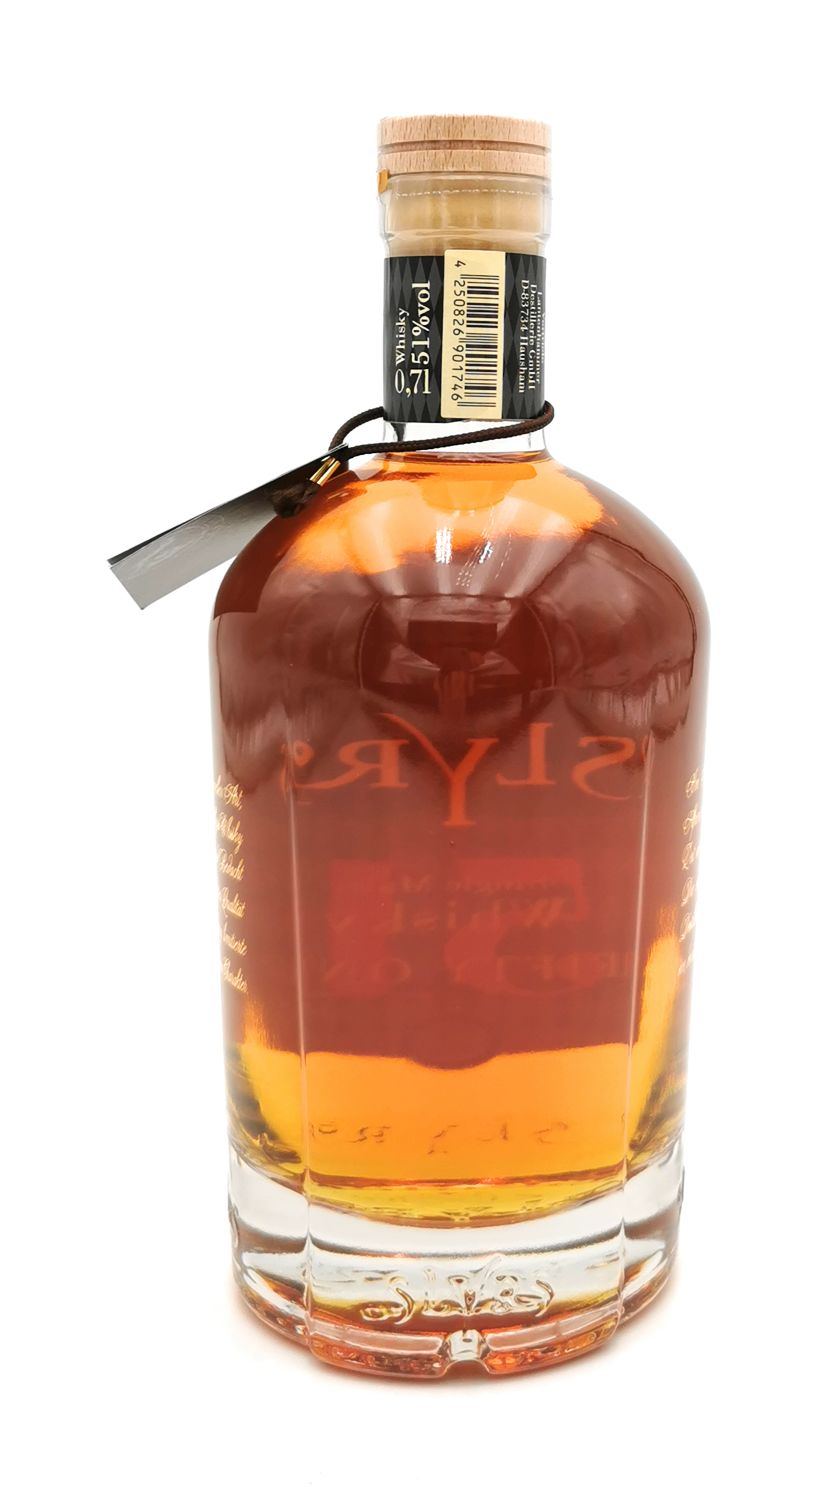 Spirituosen Aktion! :: Slyrs Fifty One Bavarian Single Malt Whisky 1x 0,7 l  Alkohol 51% vol.64,27 € / l